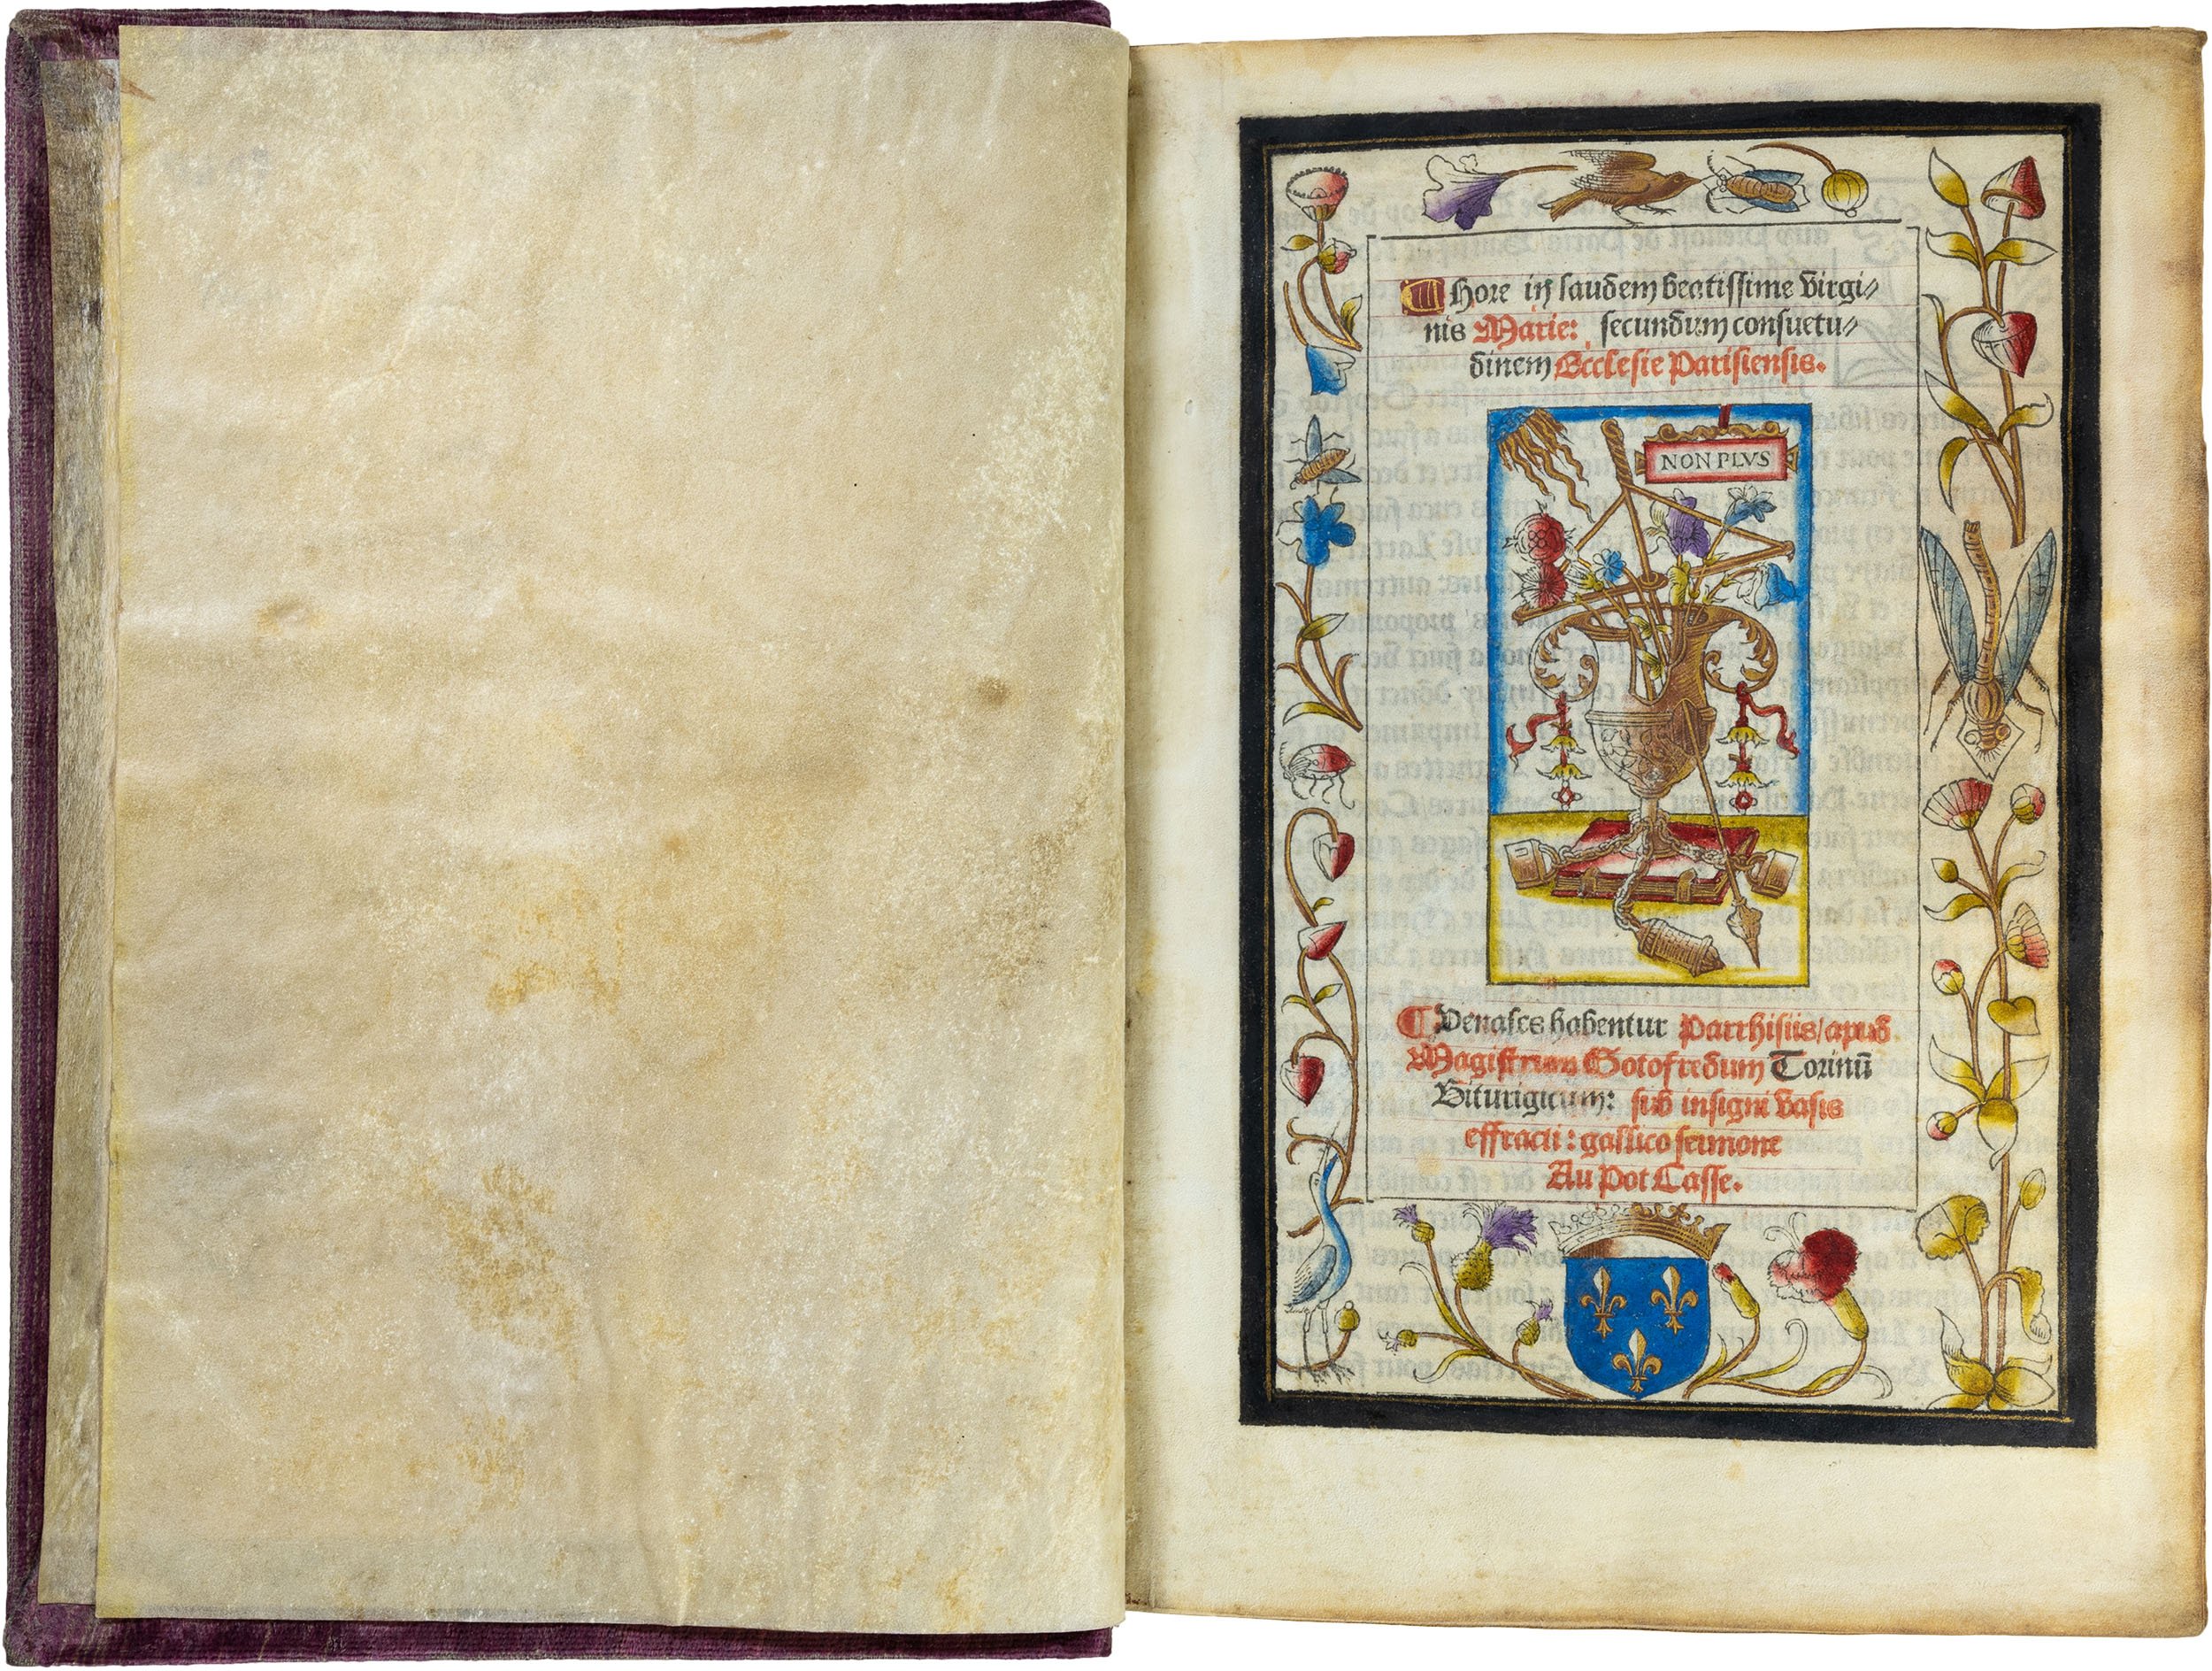 geoffroy-tory-printed-book-of-hours-illuminated-vellum-22-october-1527-prince-dessing-villeneuve-horae-bmv-03.jpg